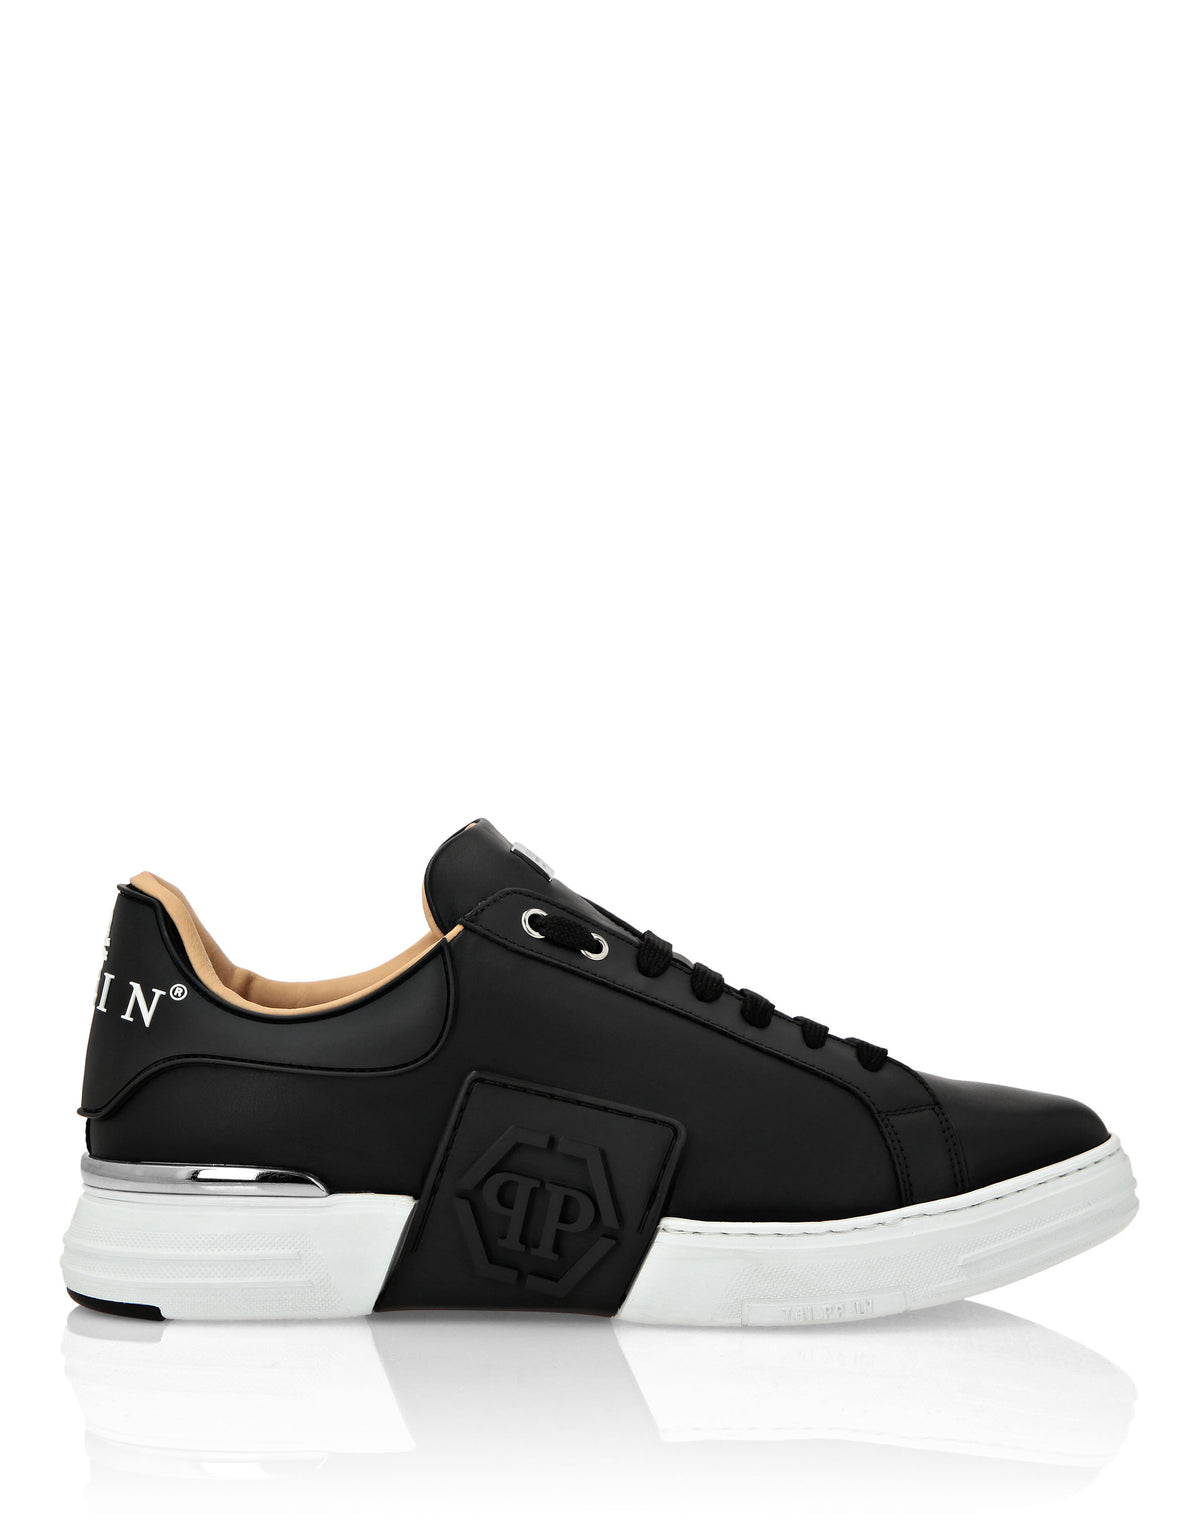 Lo-Top Sneakers Hexagon black / white